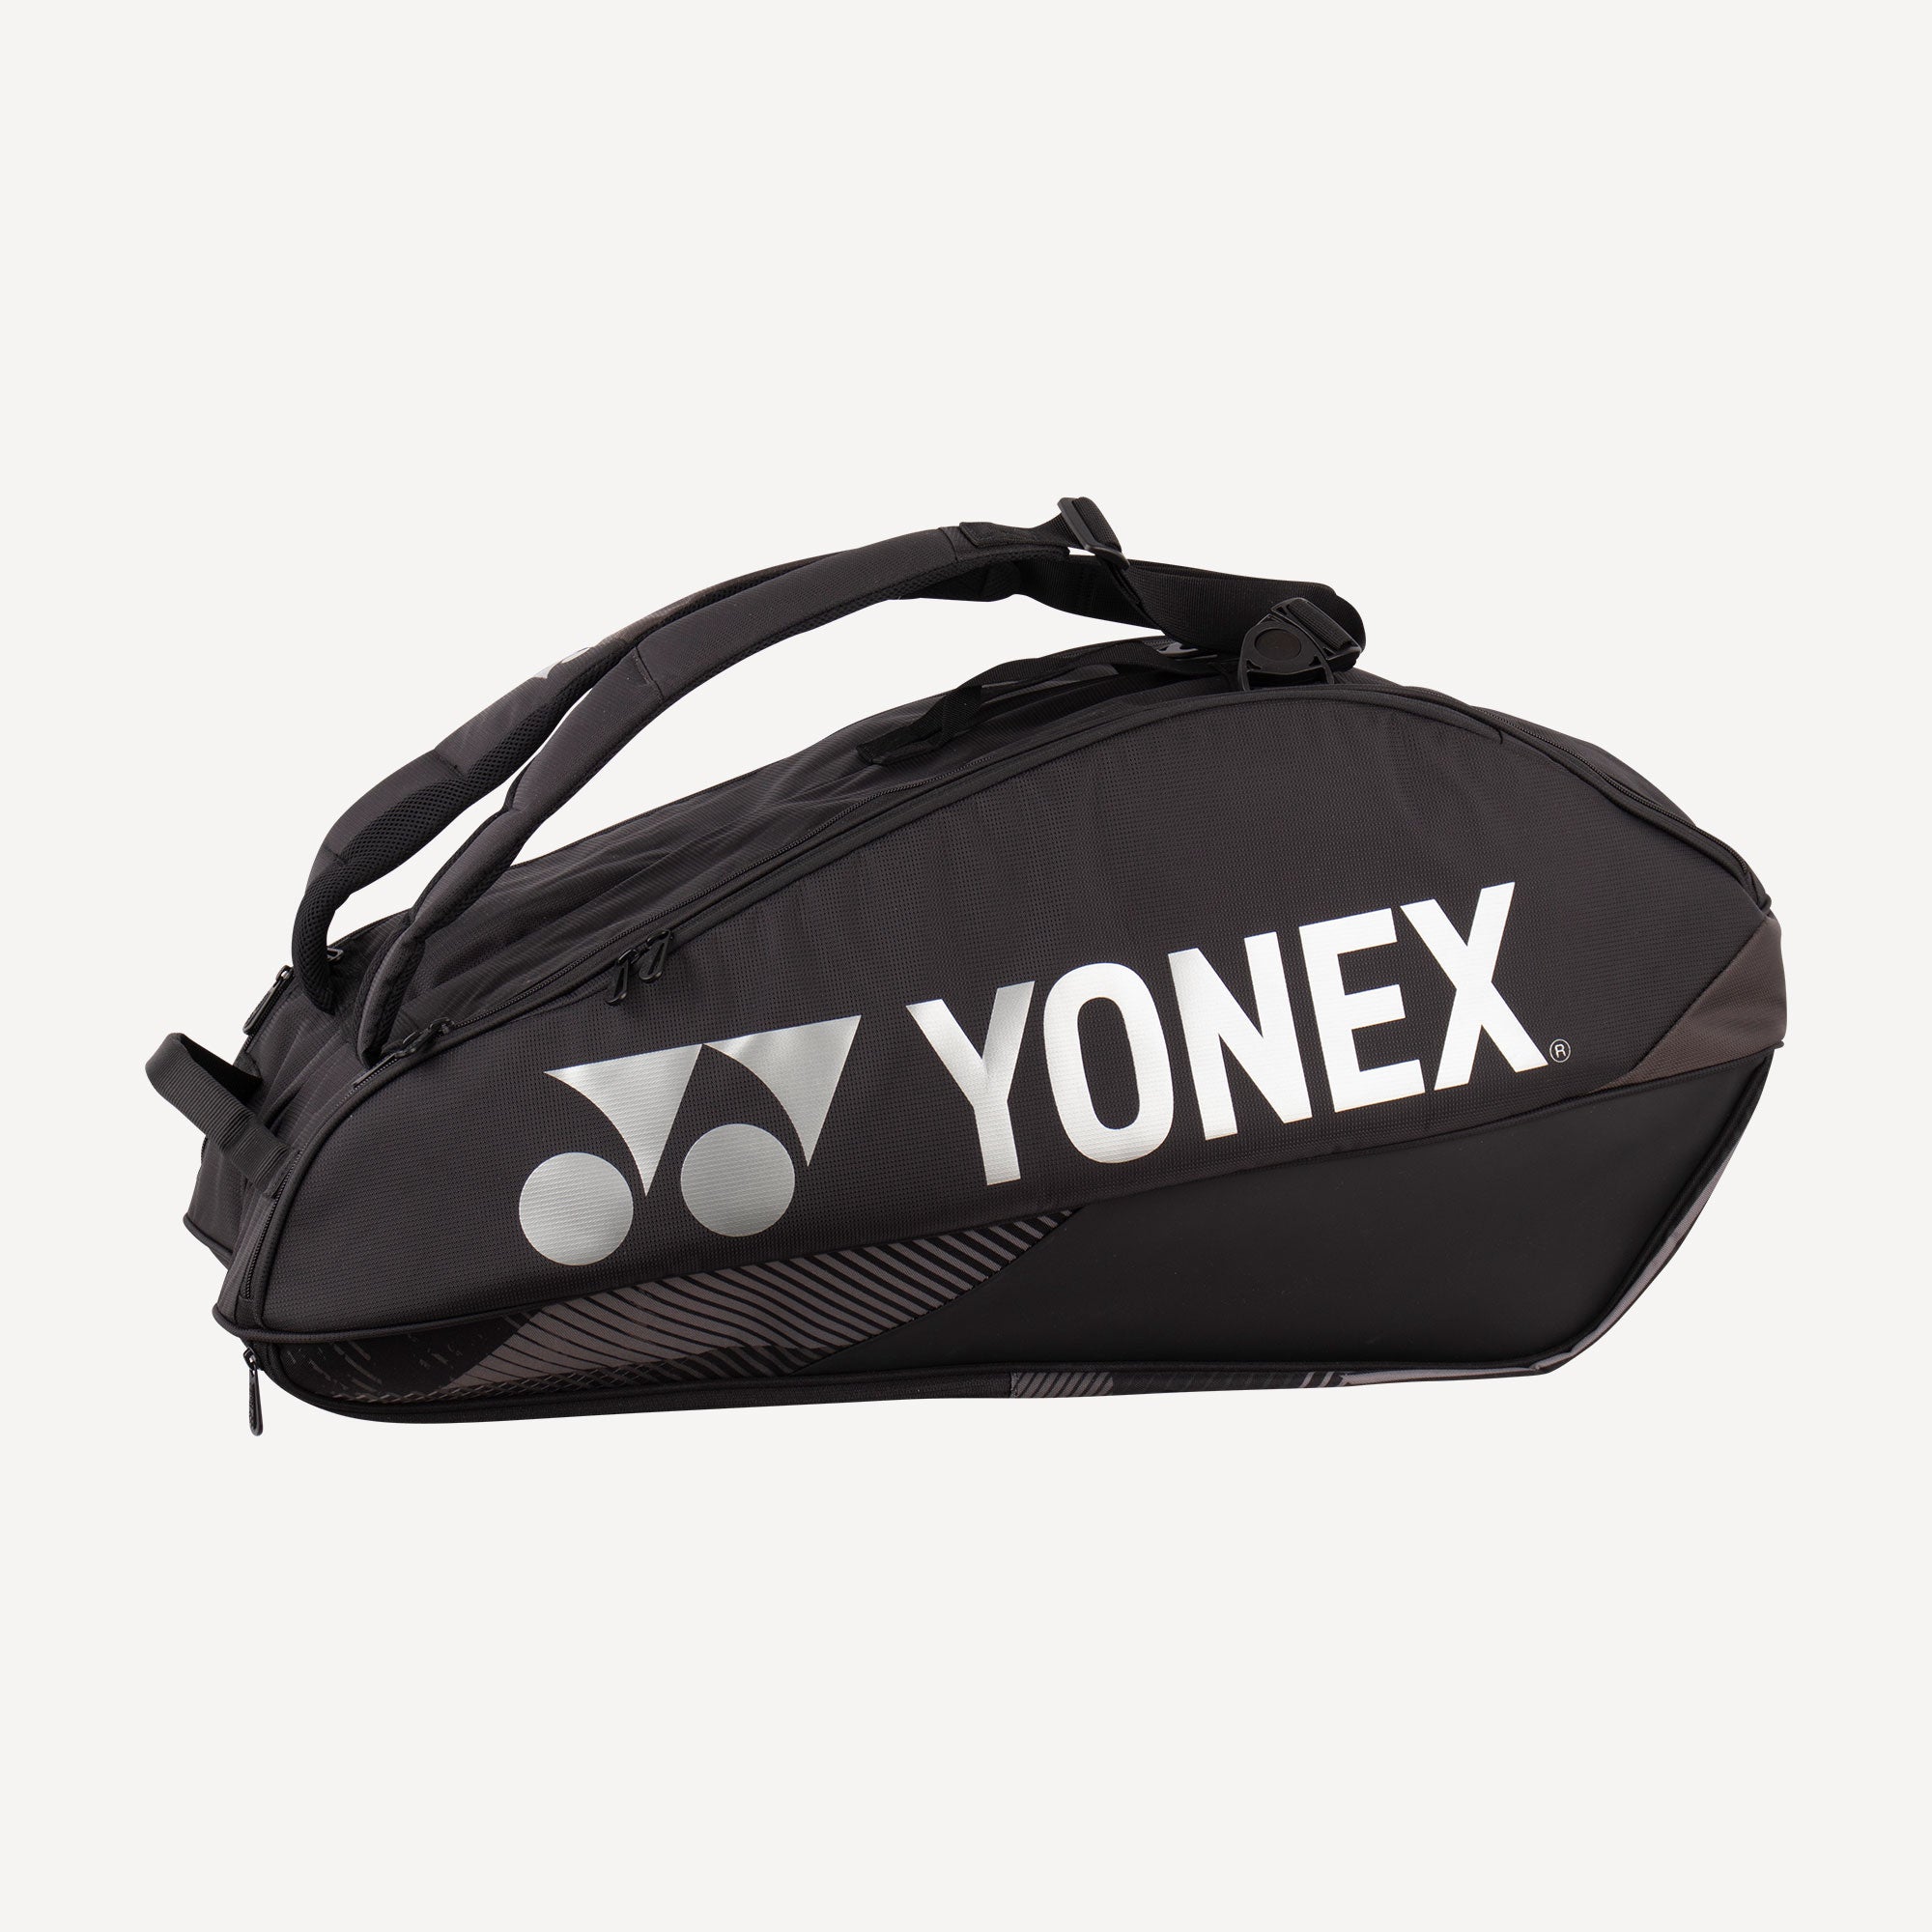 Yonex Pro 6 Racket Tennis Bag - Black (1)